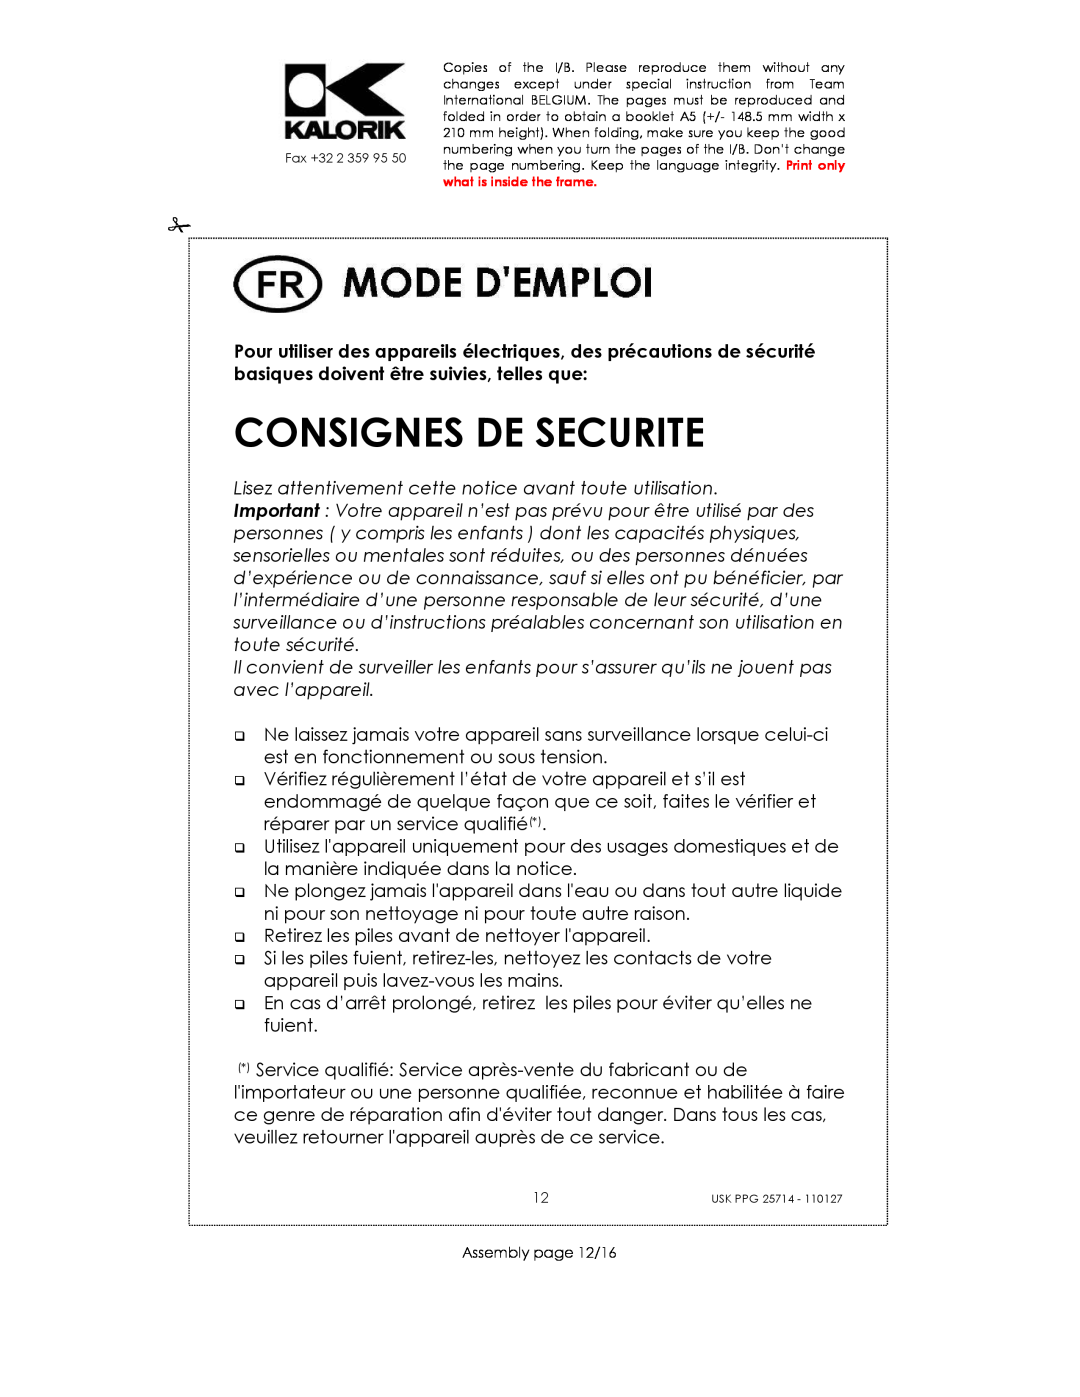 Kalorik USK PPG 25714 manual Consignes De Securite 